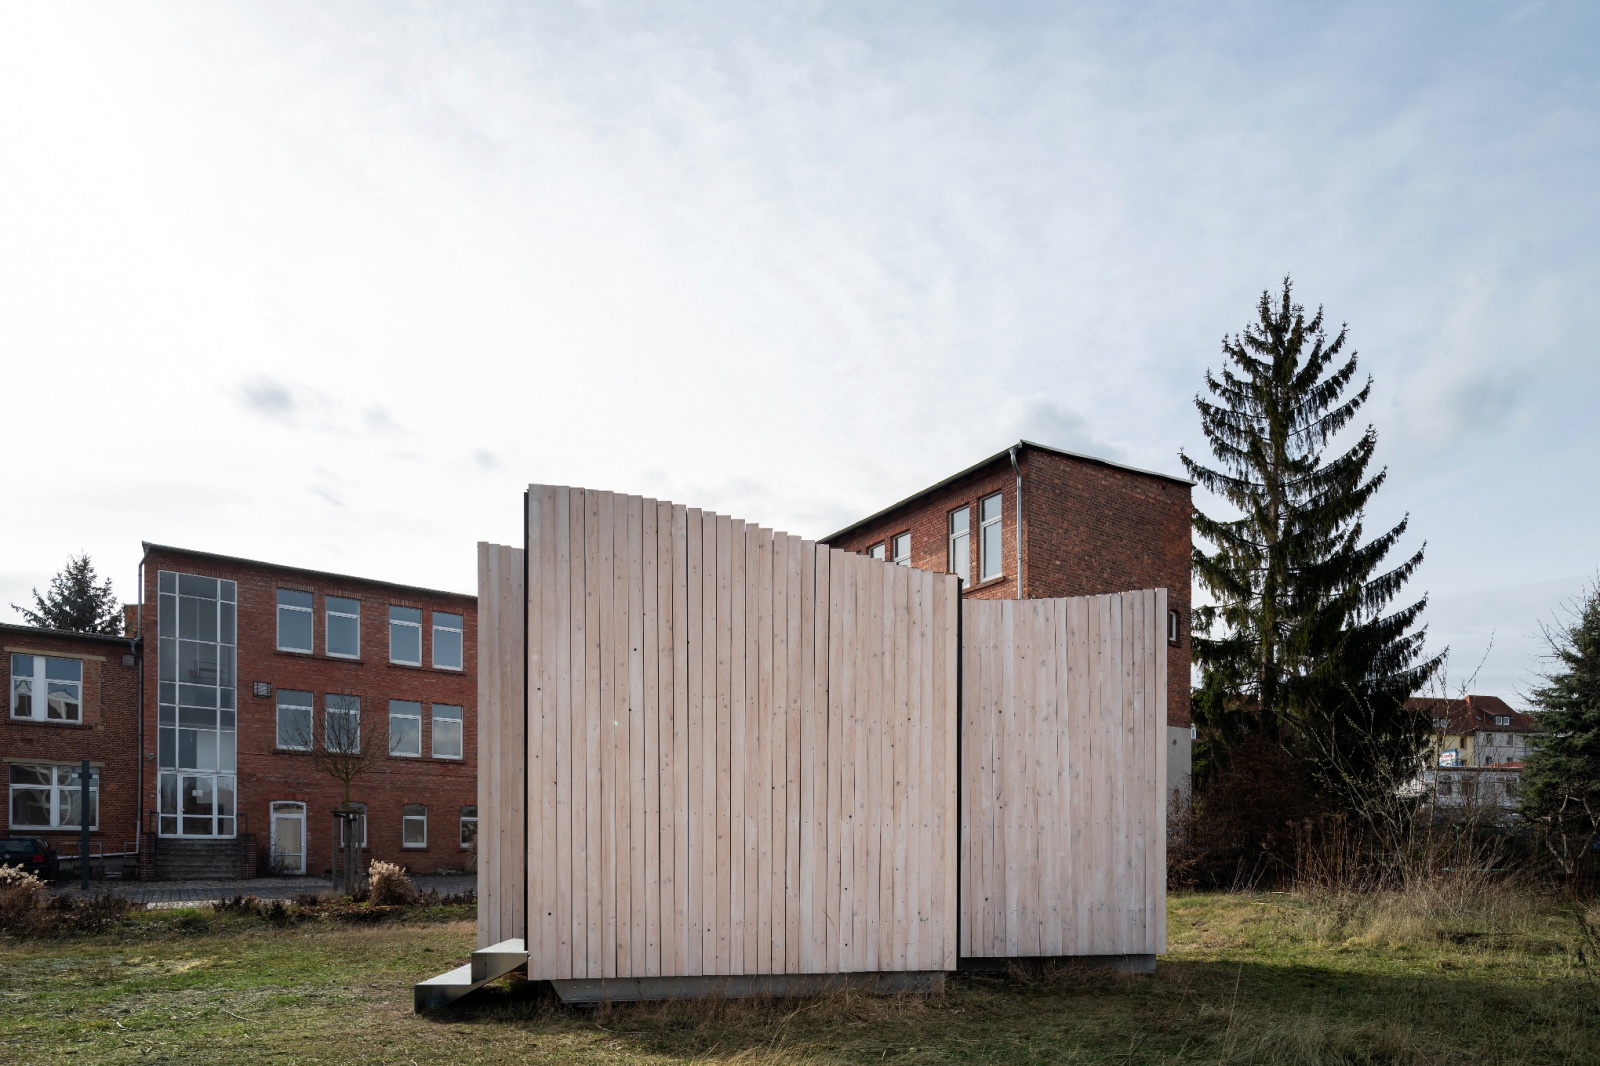 Timber Prototype House, Fassadenansicht, Bild: Thomas Müller, Weimar